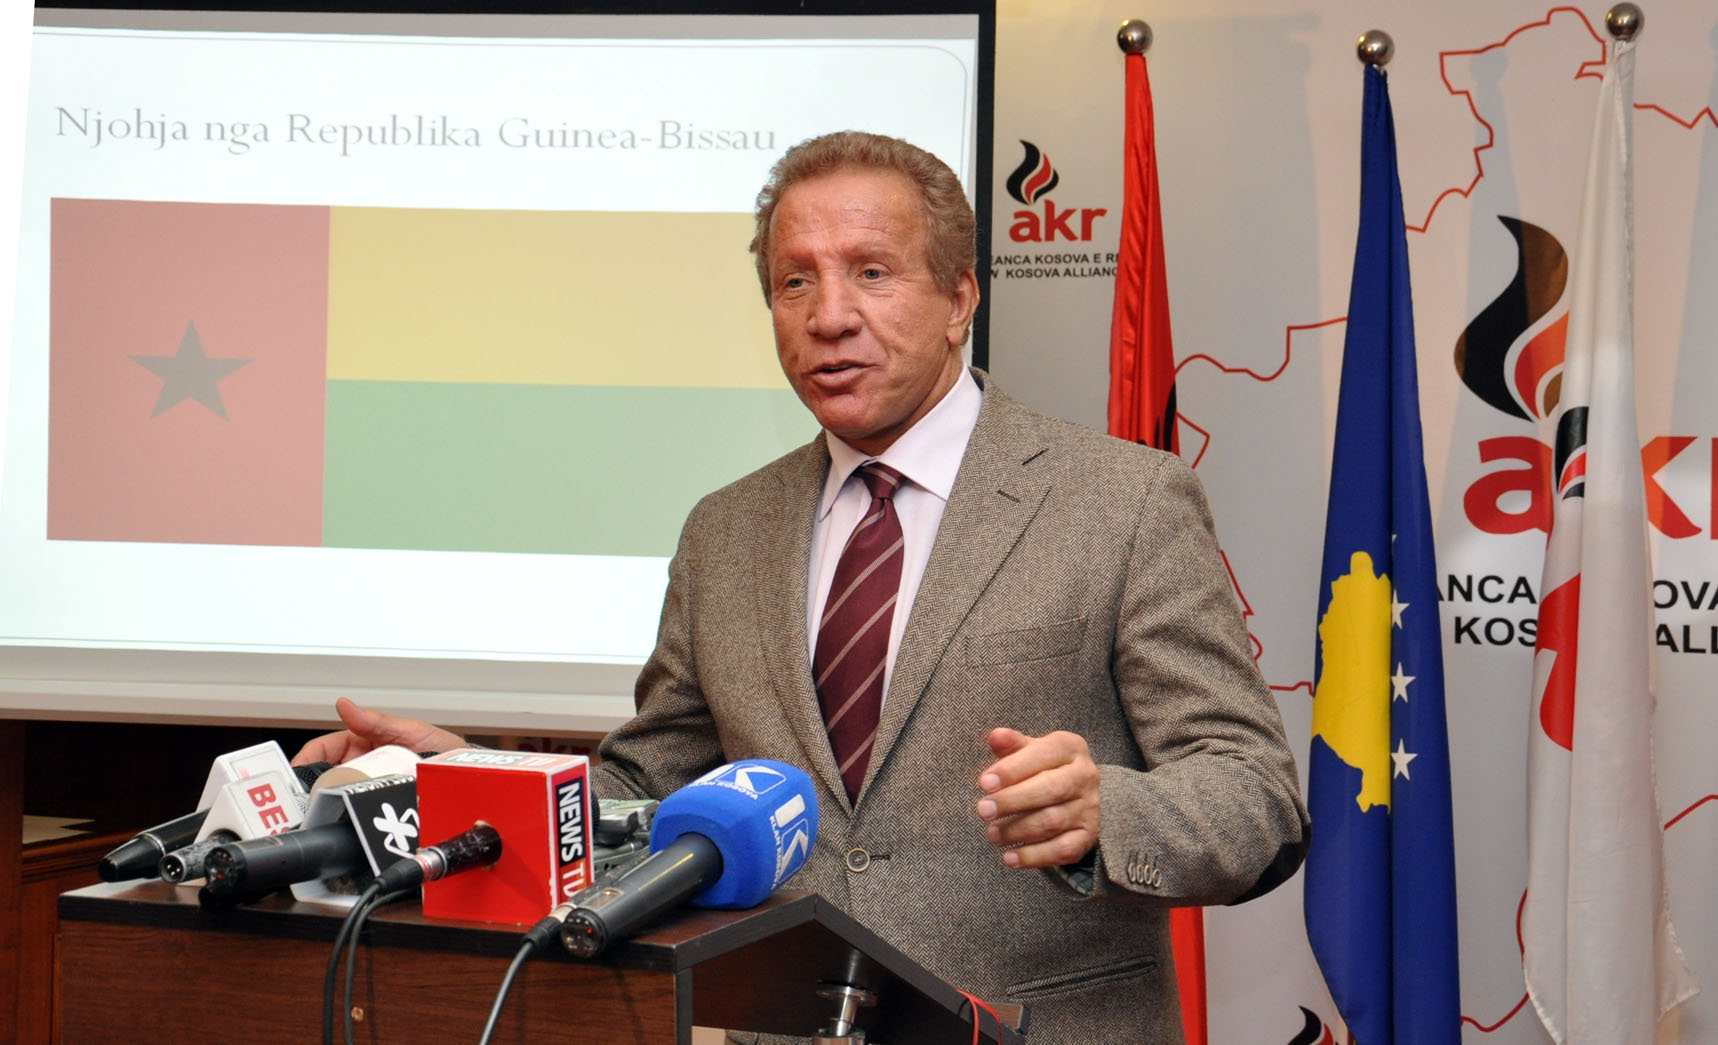 Presidenti Pacolli me 21 mars viziton Tiranën